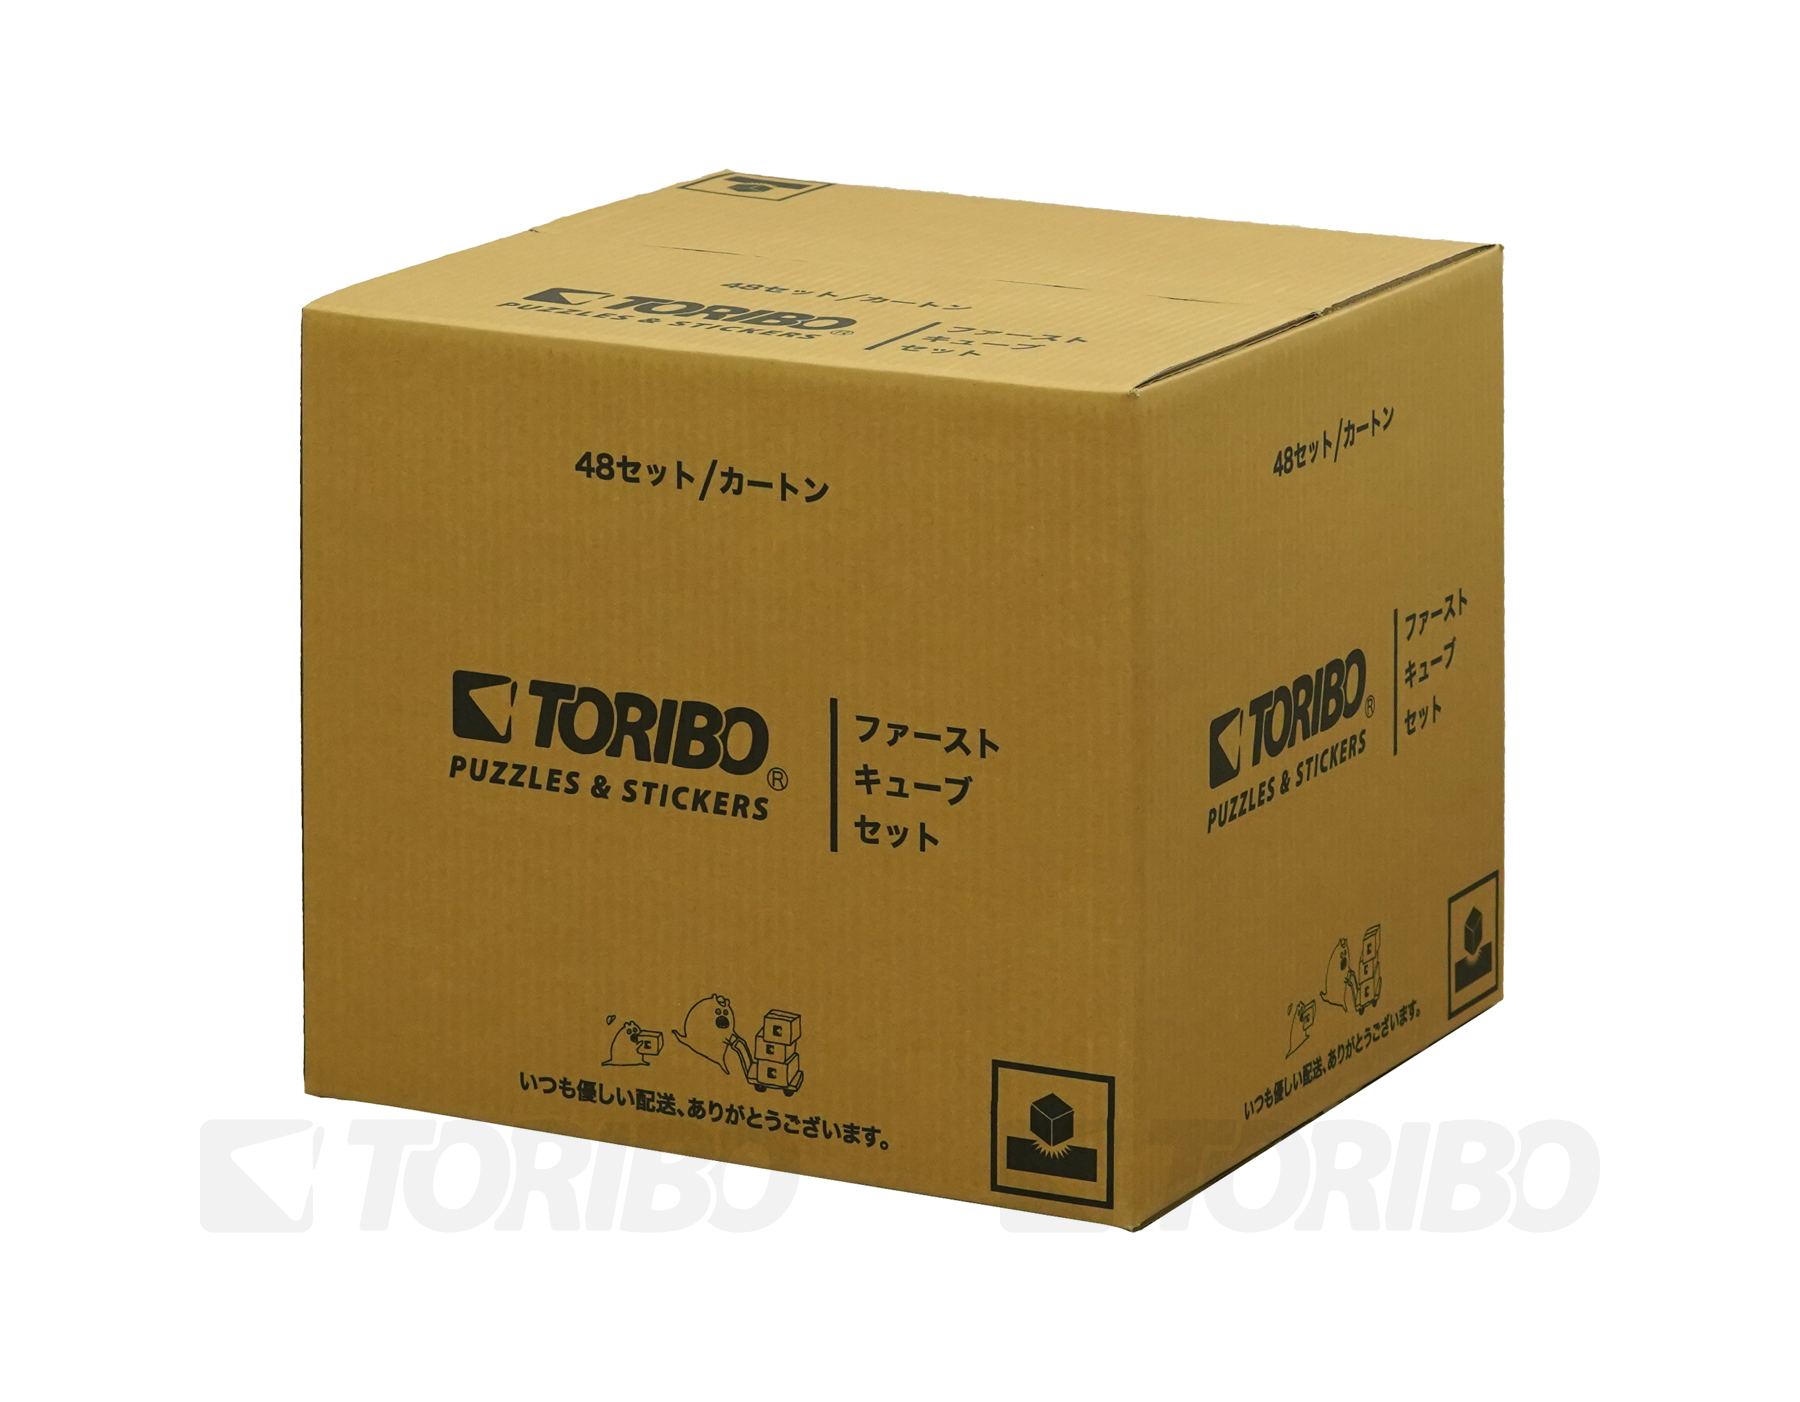 triboxストア / TORIBO ファーストキューブセット カートン (48セット)